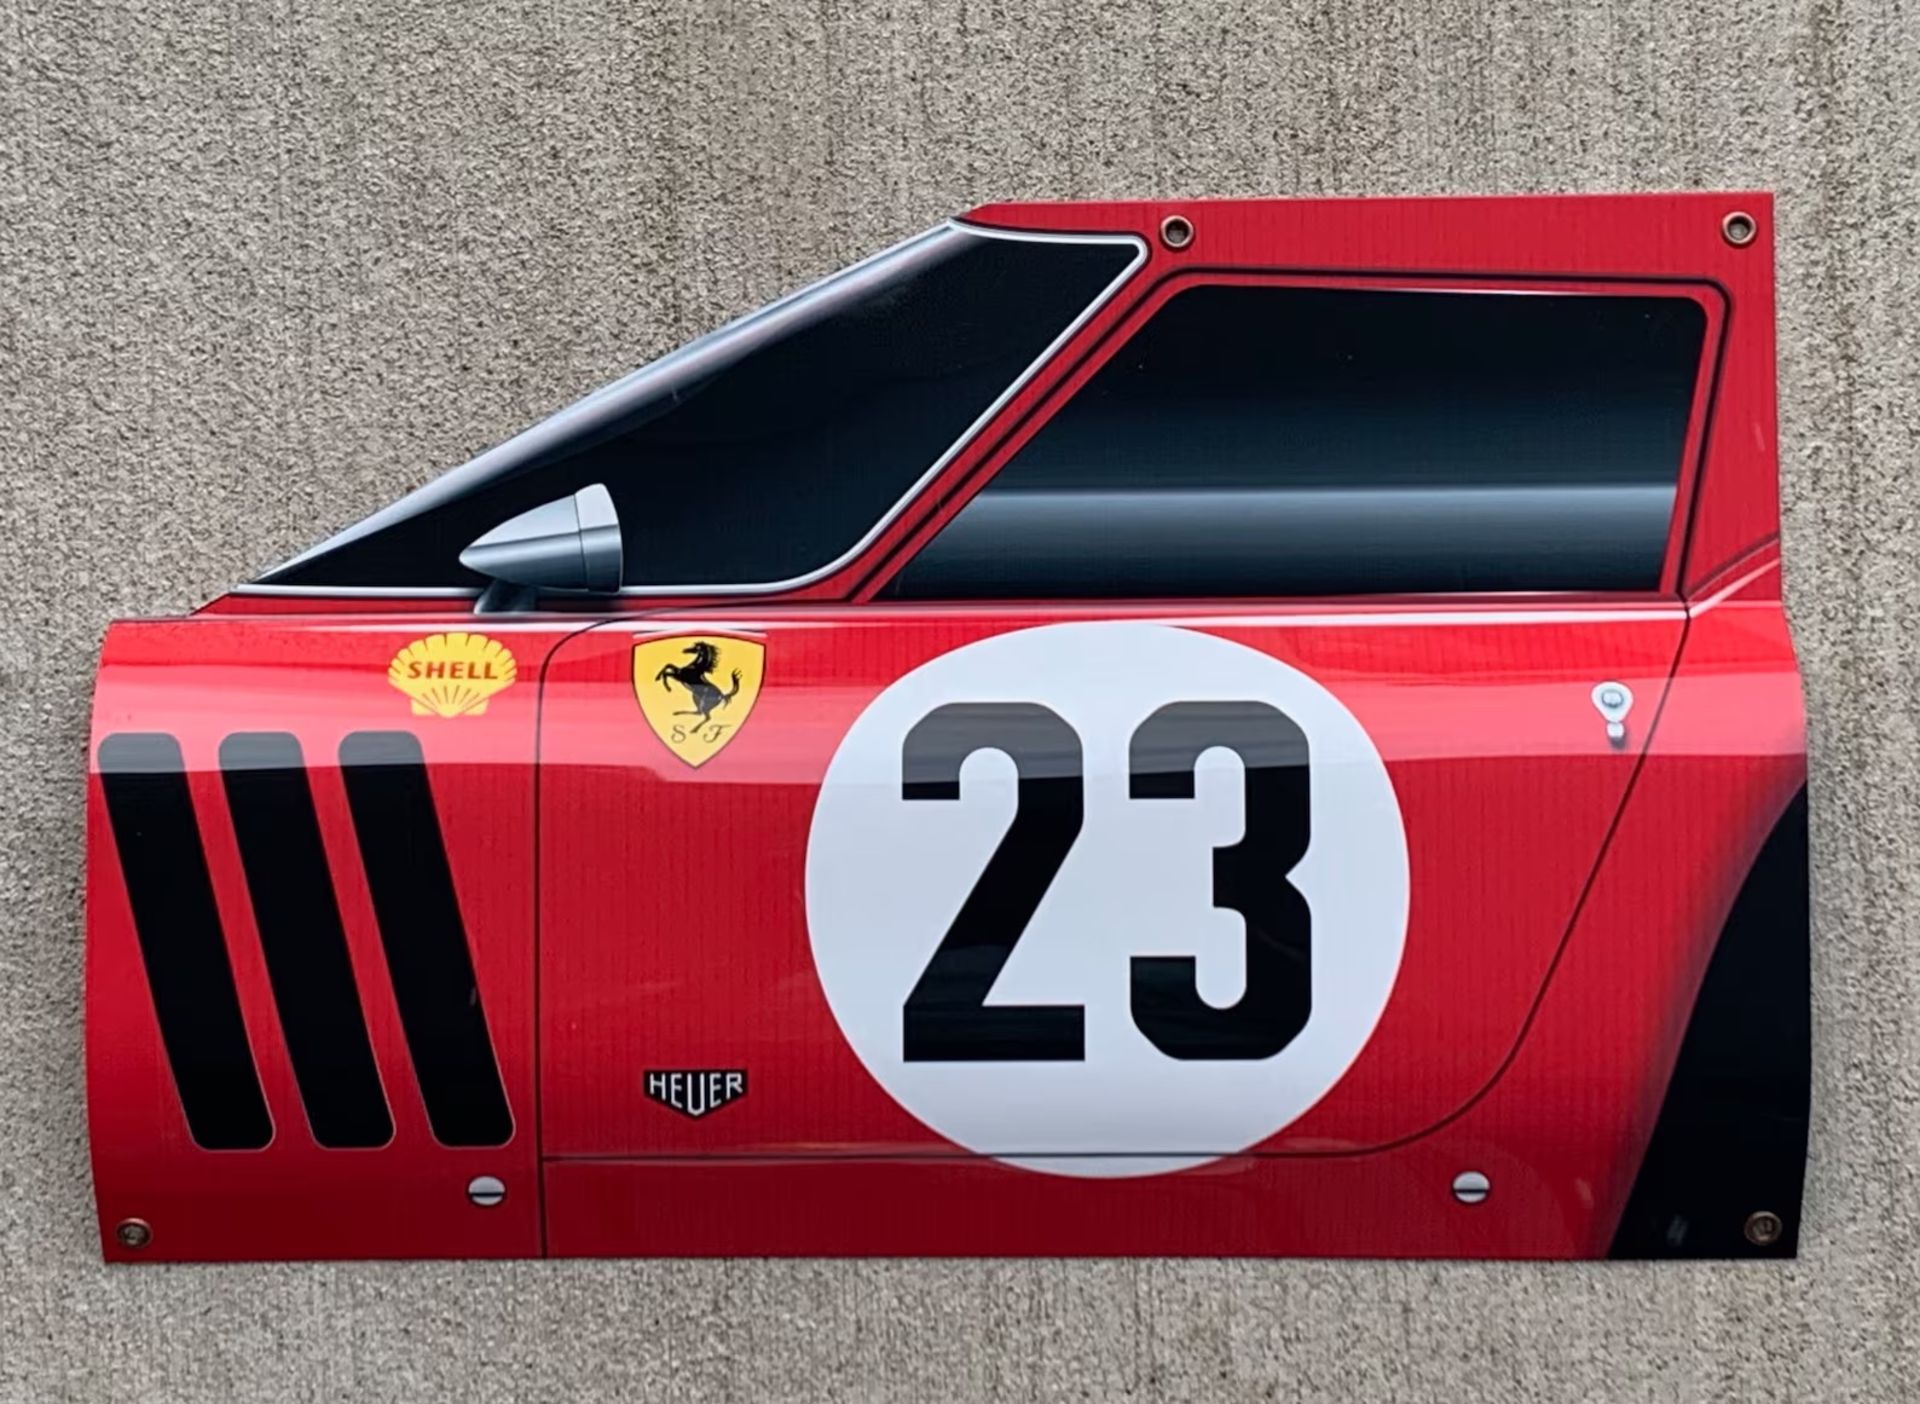 Ferrari 250 GTO Wall Display - Image 5 of 5